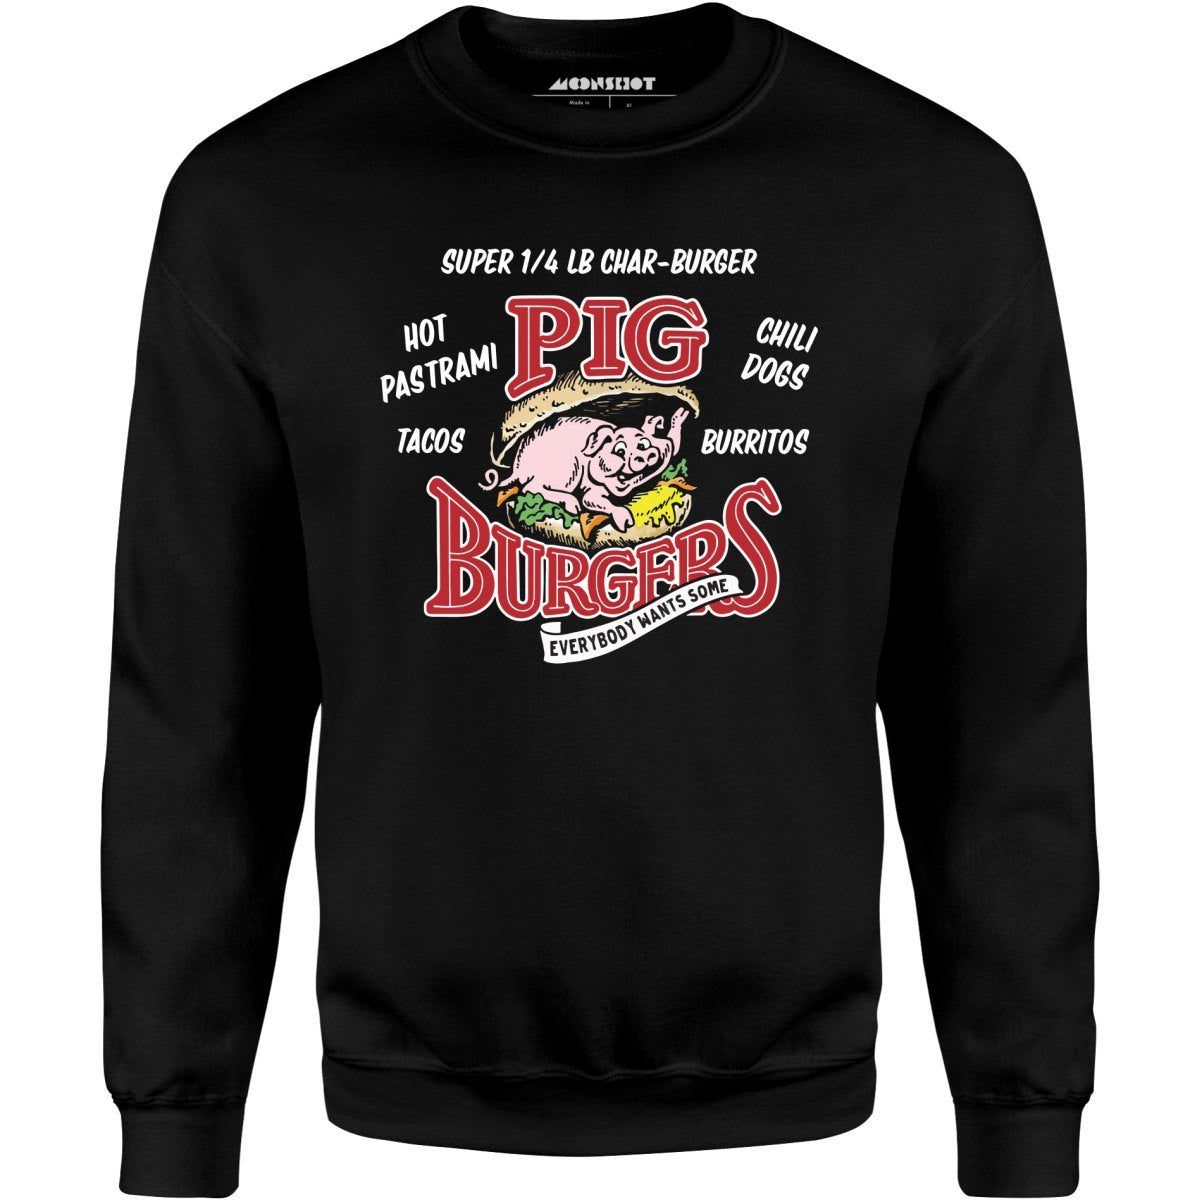 Pig Burgers - Everybody Wants Some - Unisex Sweatshirt